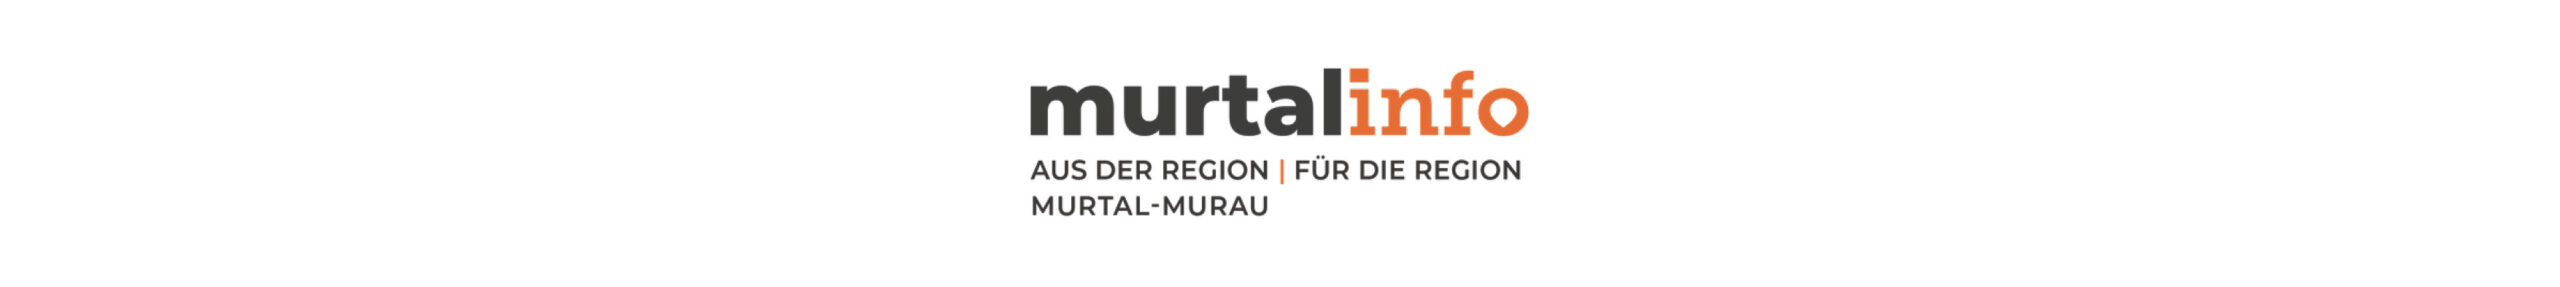 murtalinfo-banner-scaled-1